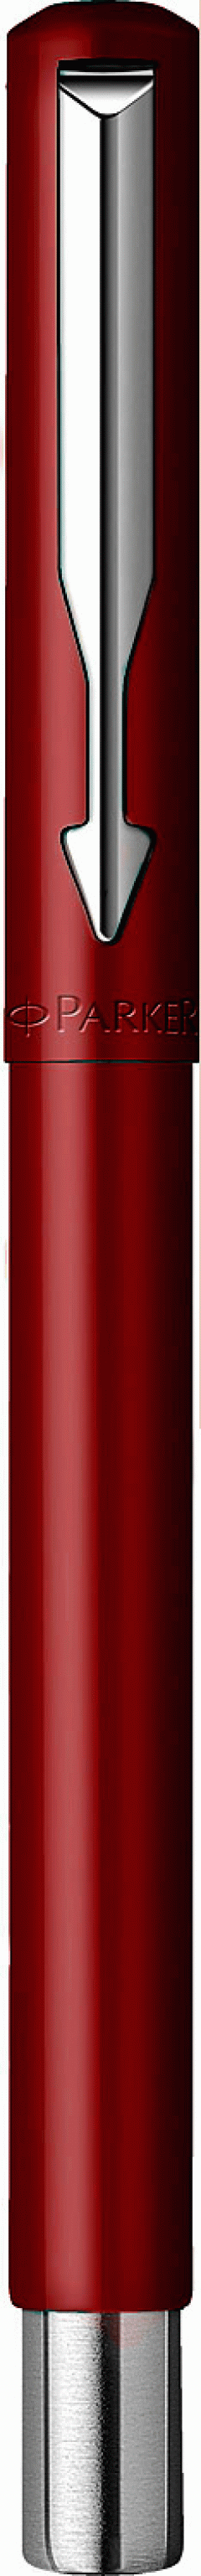 Stilou Vector Standard rosu